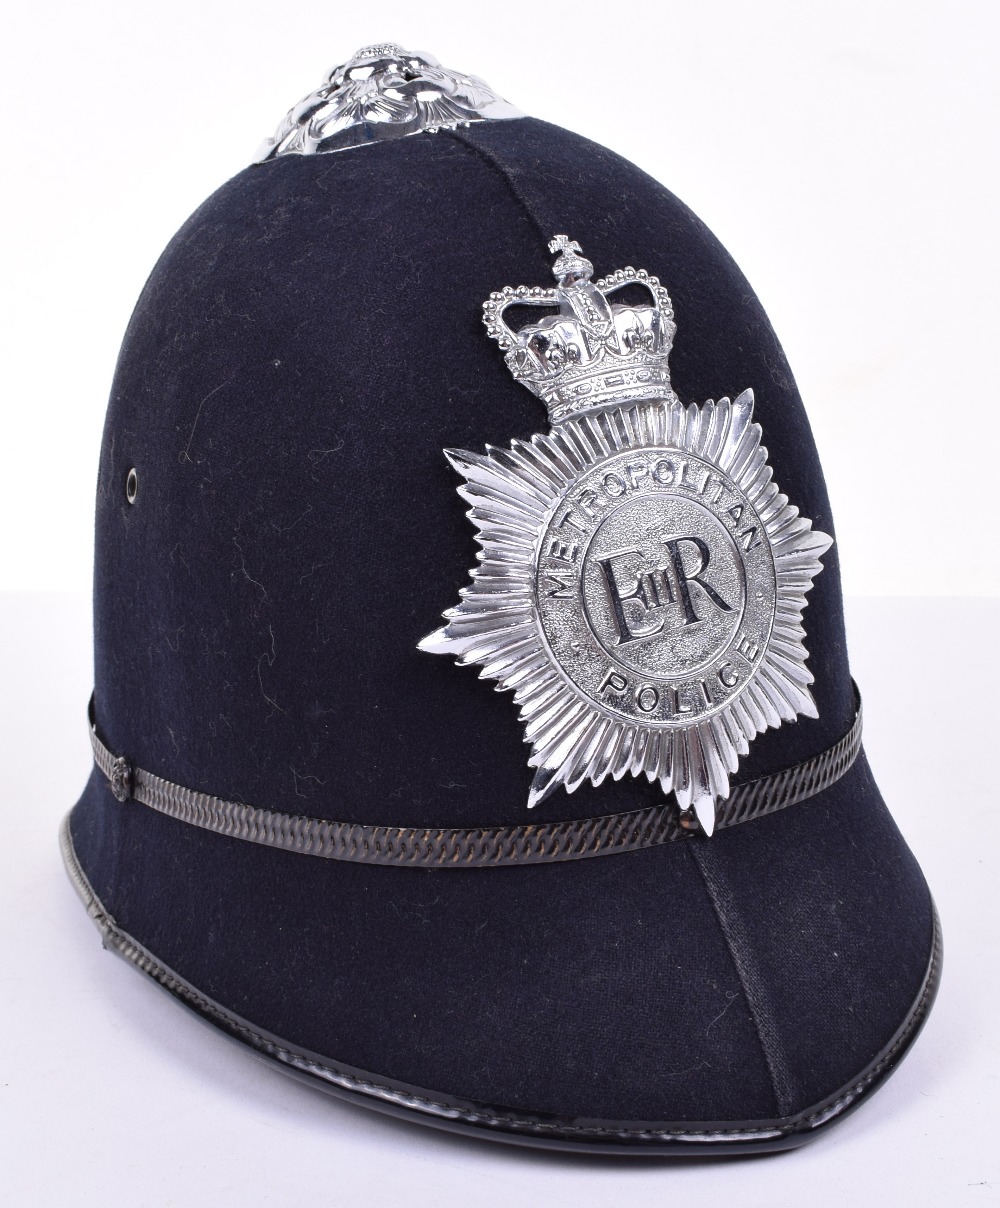 Obsolete Pattern Metropolitan Police Helmet and Tunic - Image 2 of 5